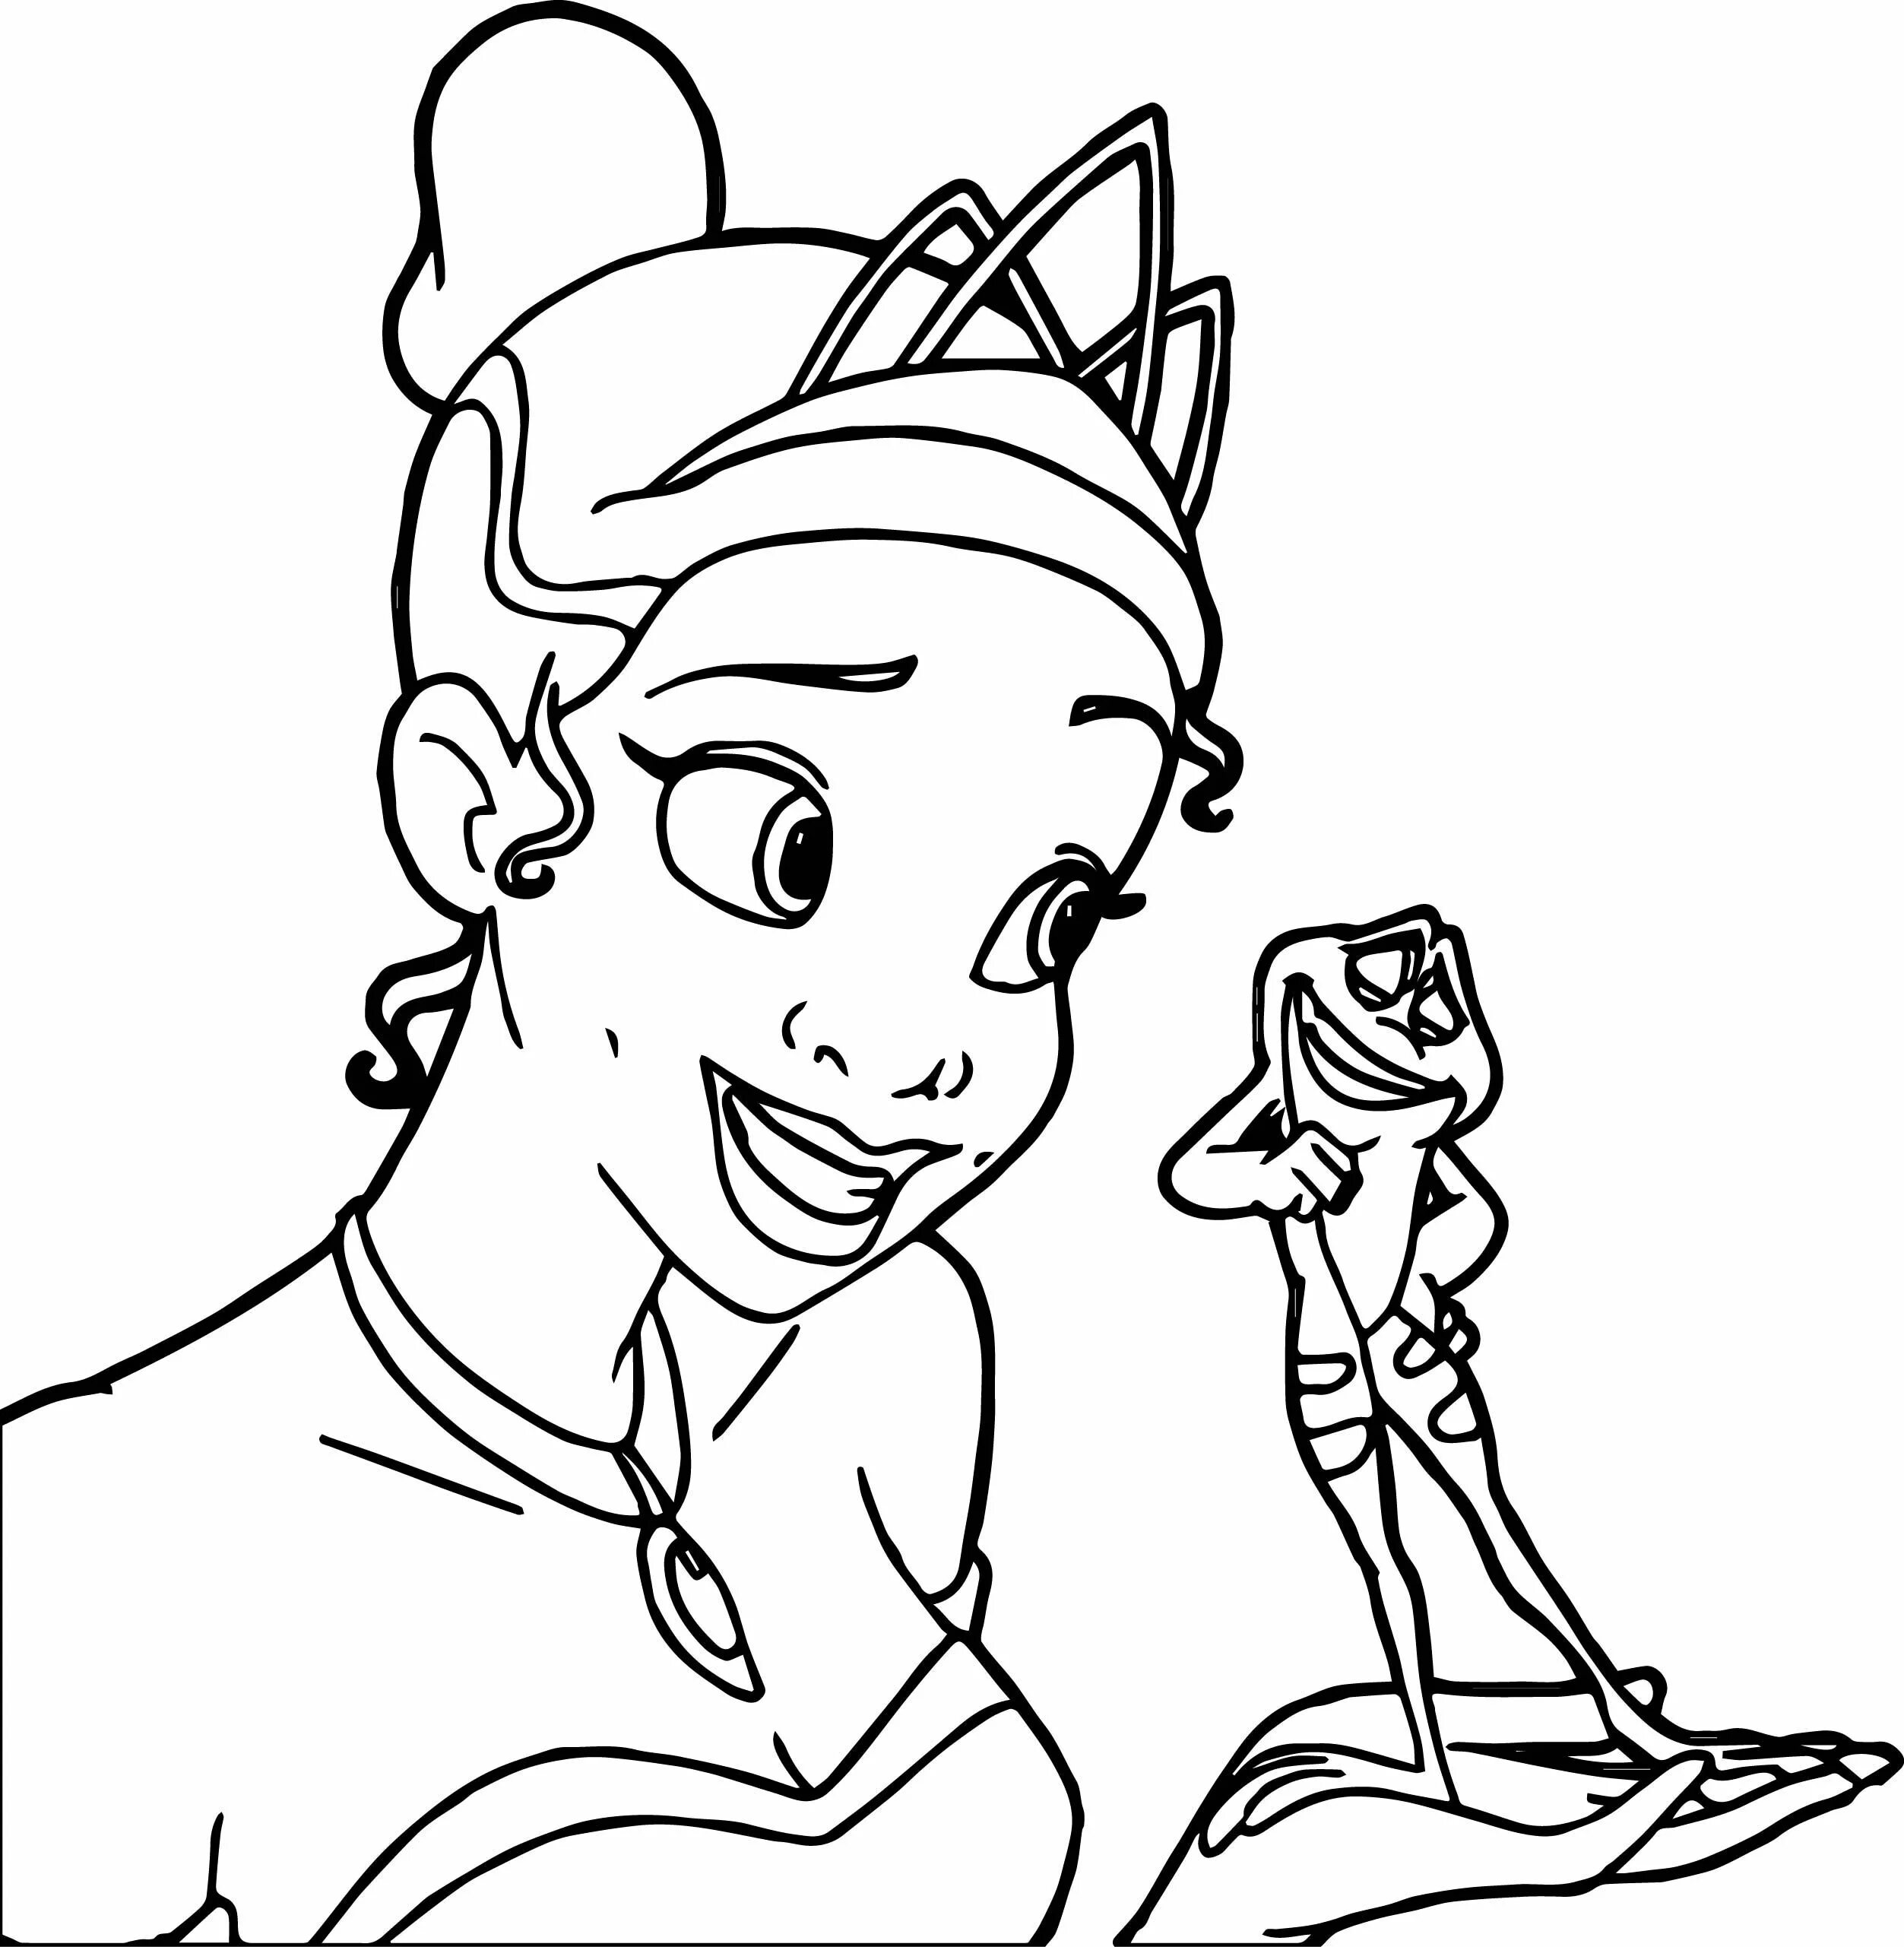 Exuberant diana princess coloring page